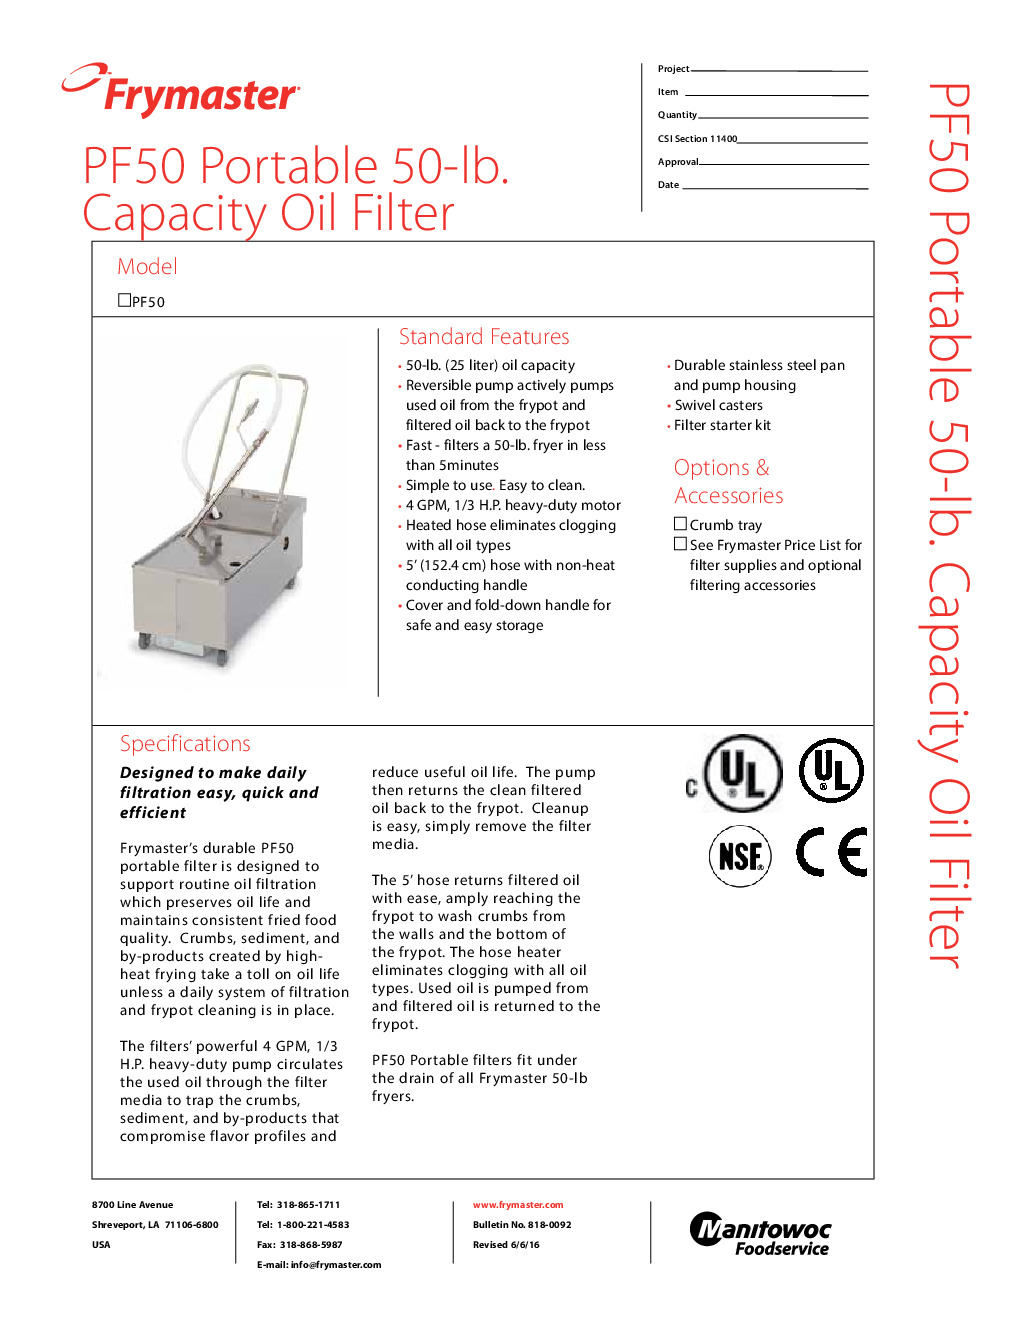 Frymaster PF50R Mobile Fryer Filter w/ 50-Lb Oil Capacity, Reversible Pump, Filter Starter Kit